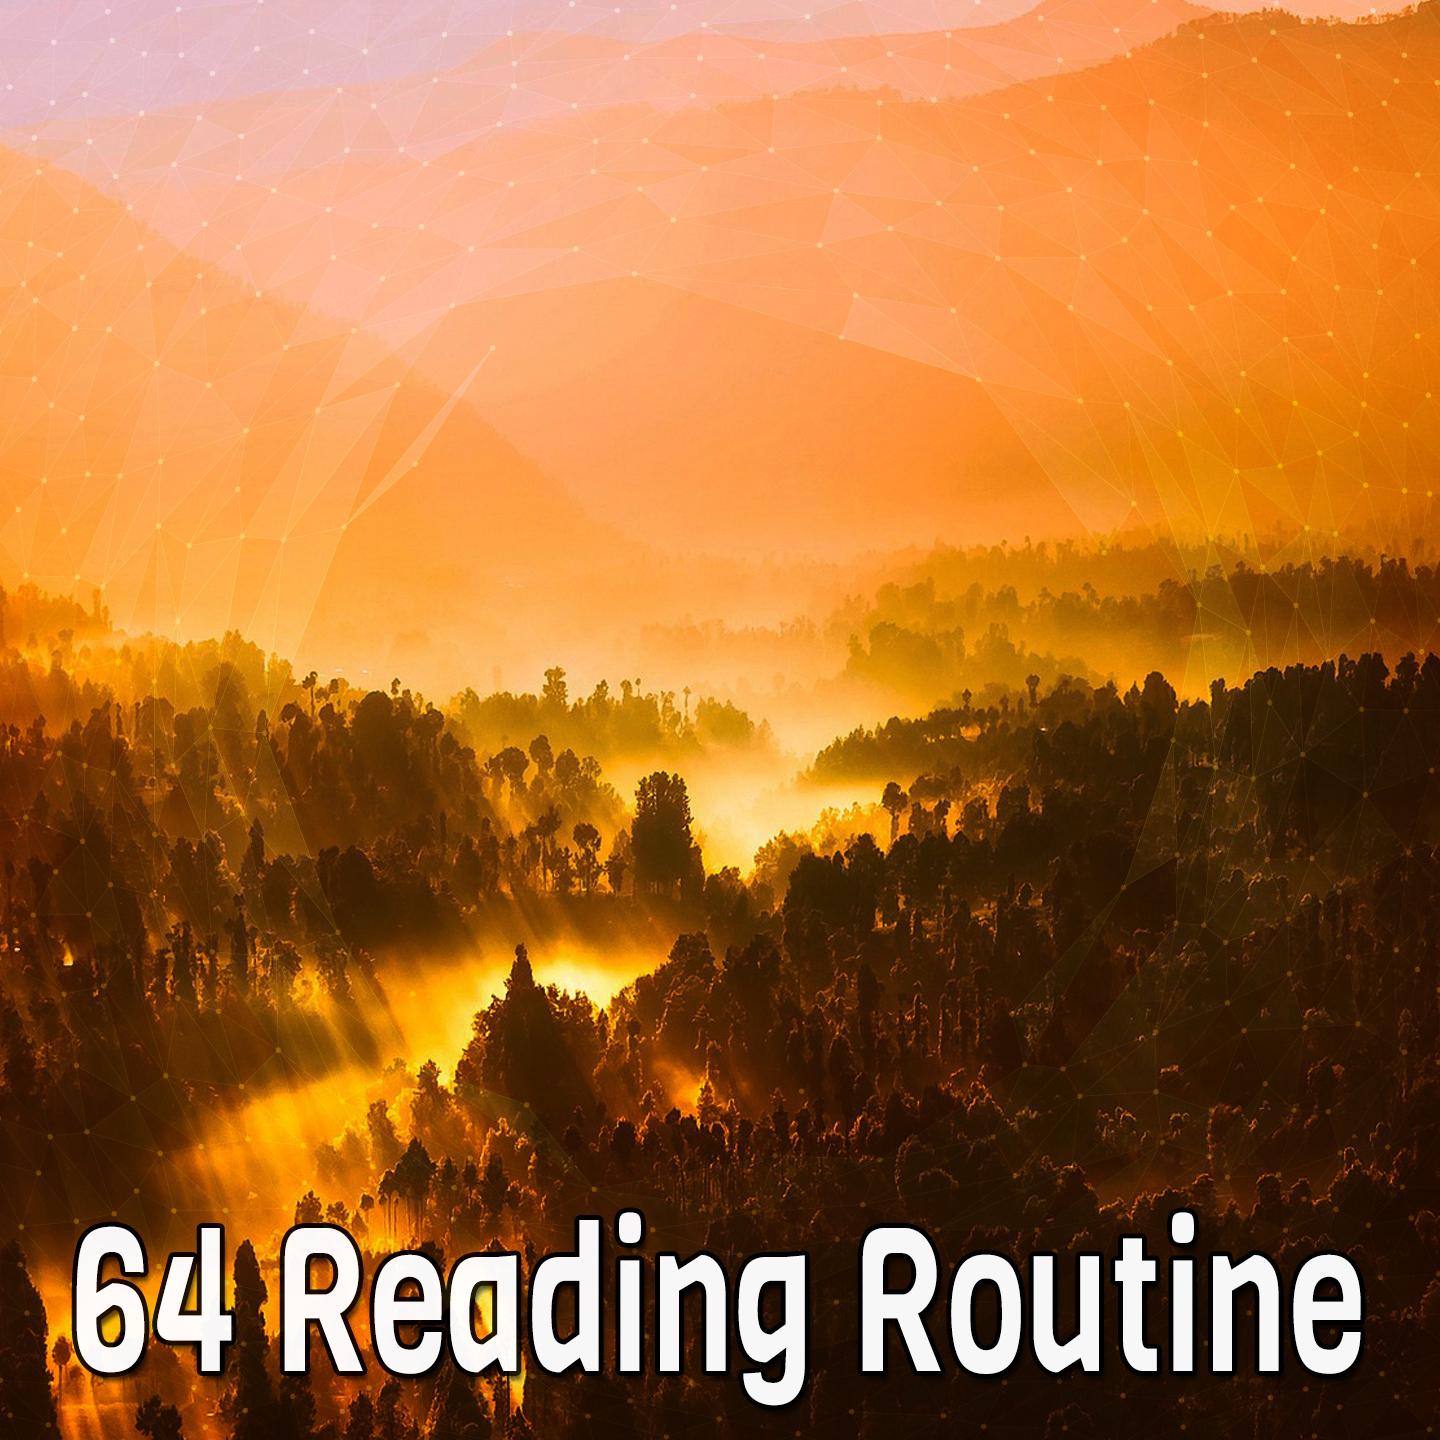 64 Reading Routine